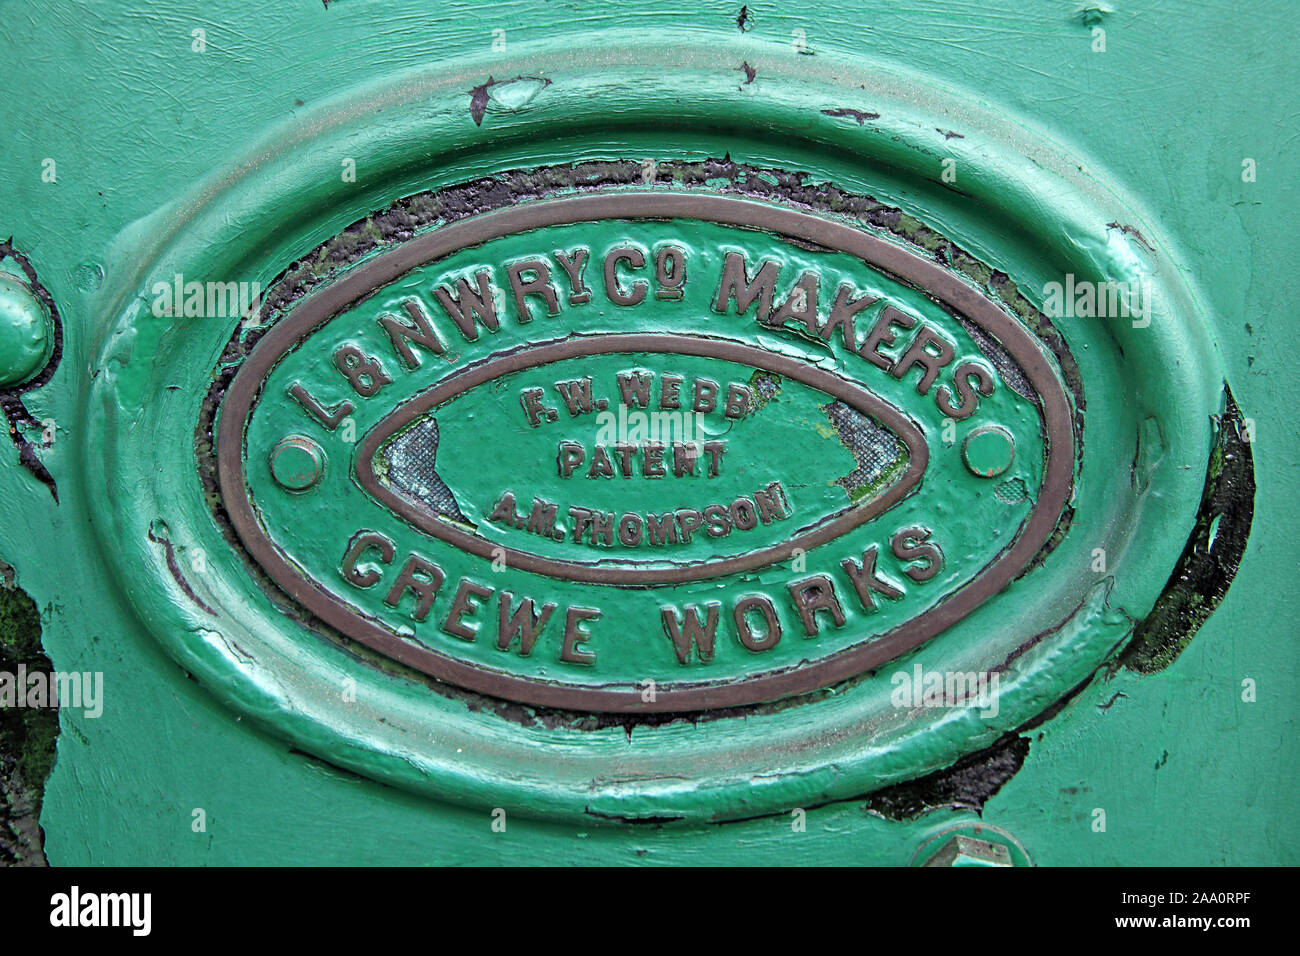 Piastra responsabili, Verde, L&NWryCo makers, Londra e North Western Railway,Crewe Opere, FW Webb, brevetto,AM Thompson Foto Stock